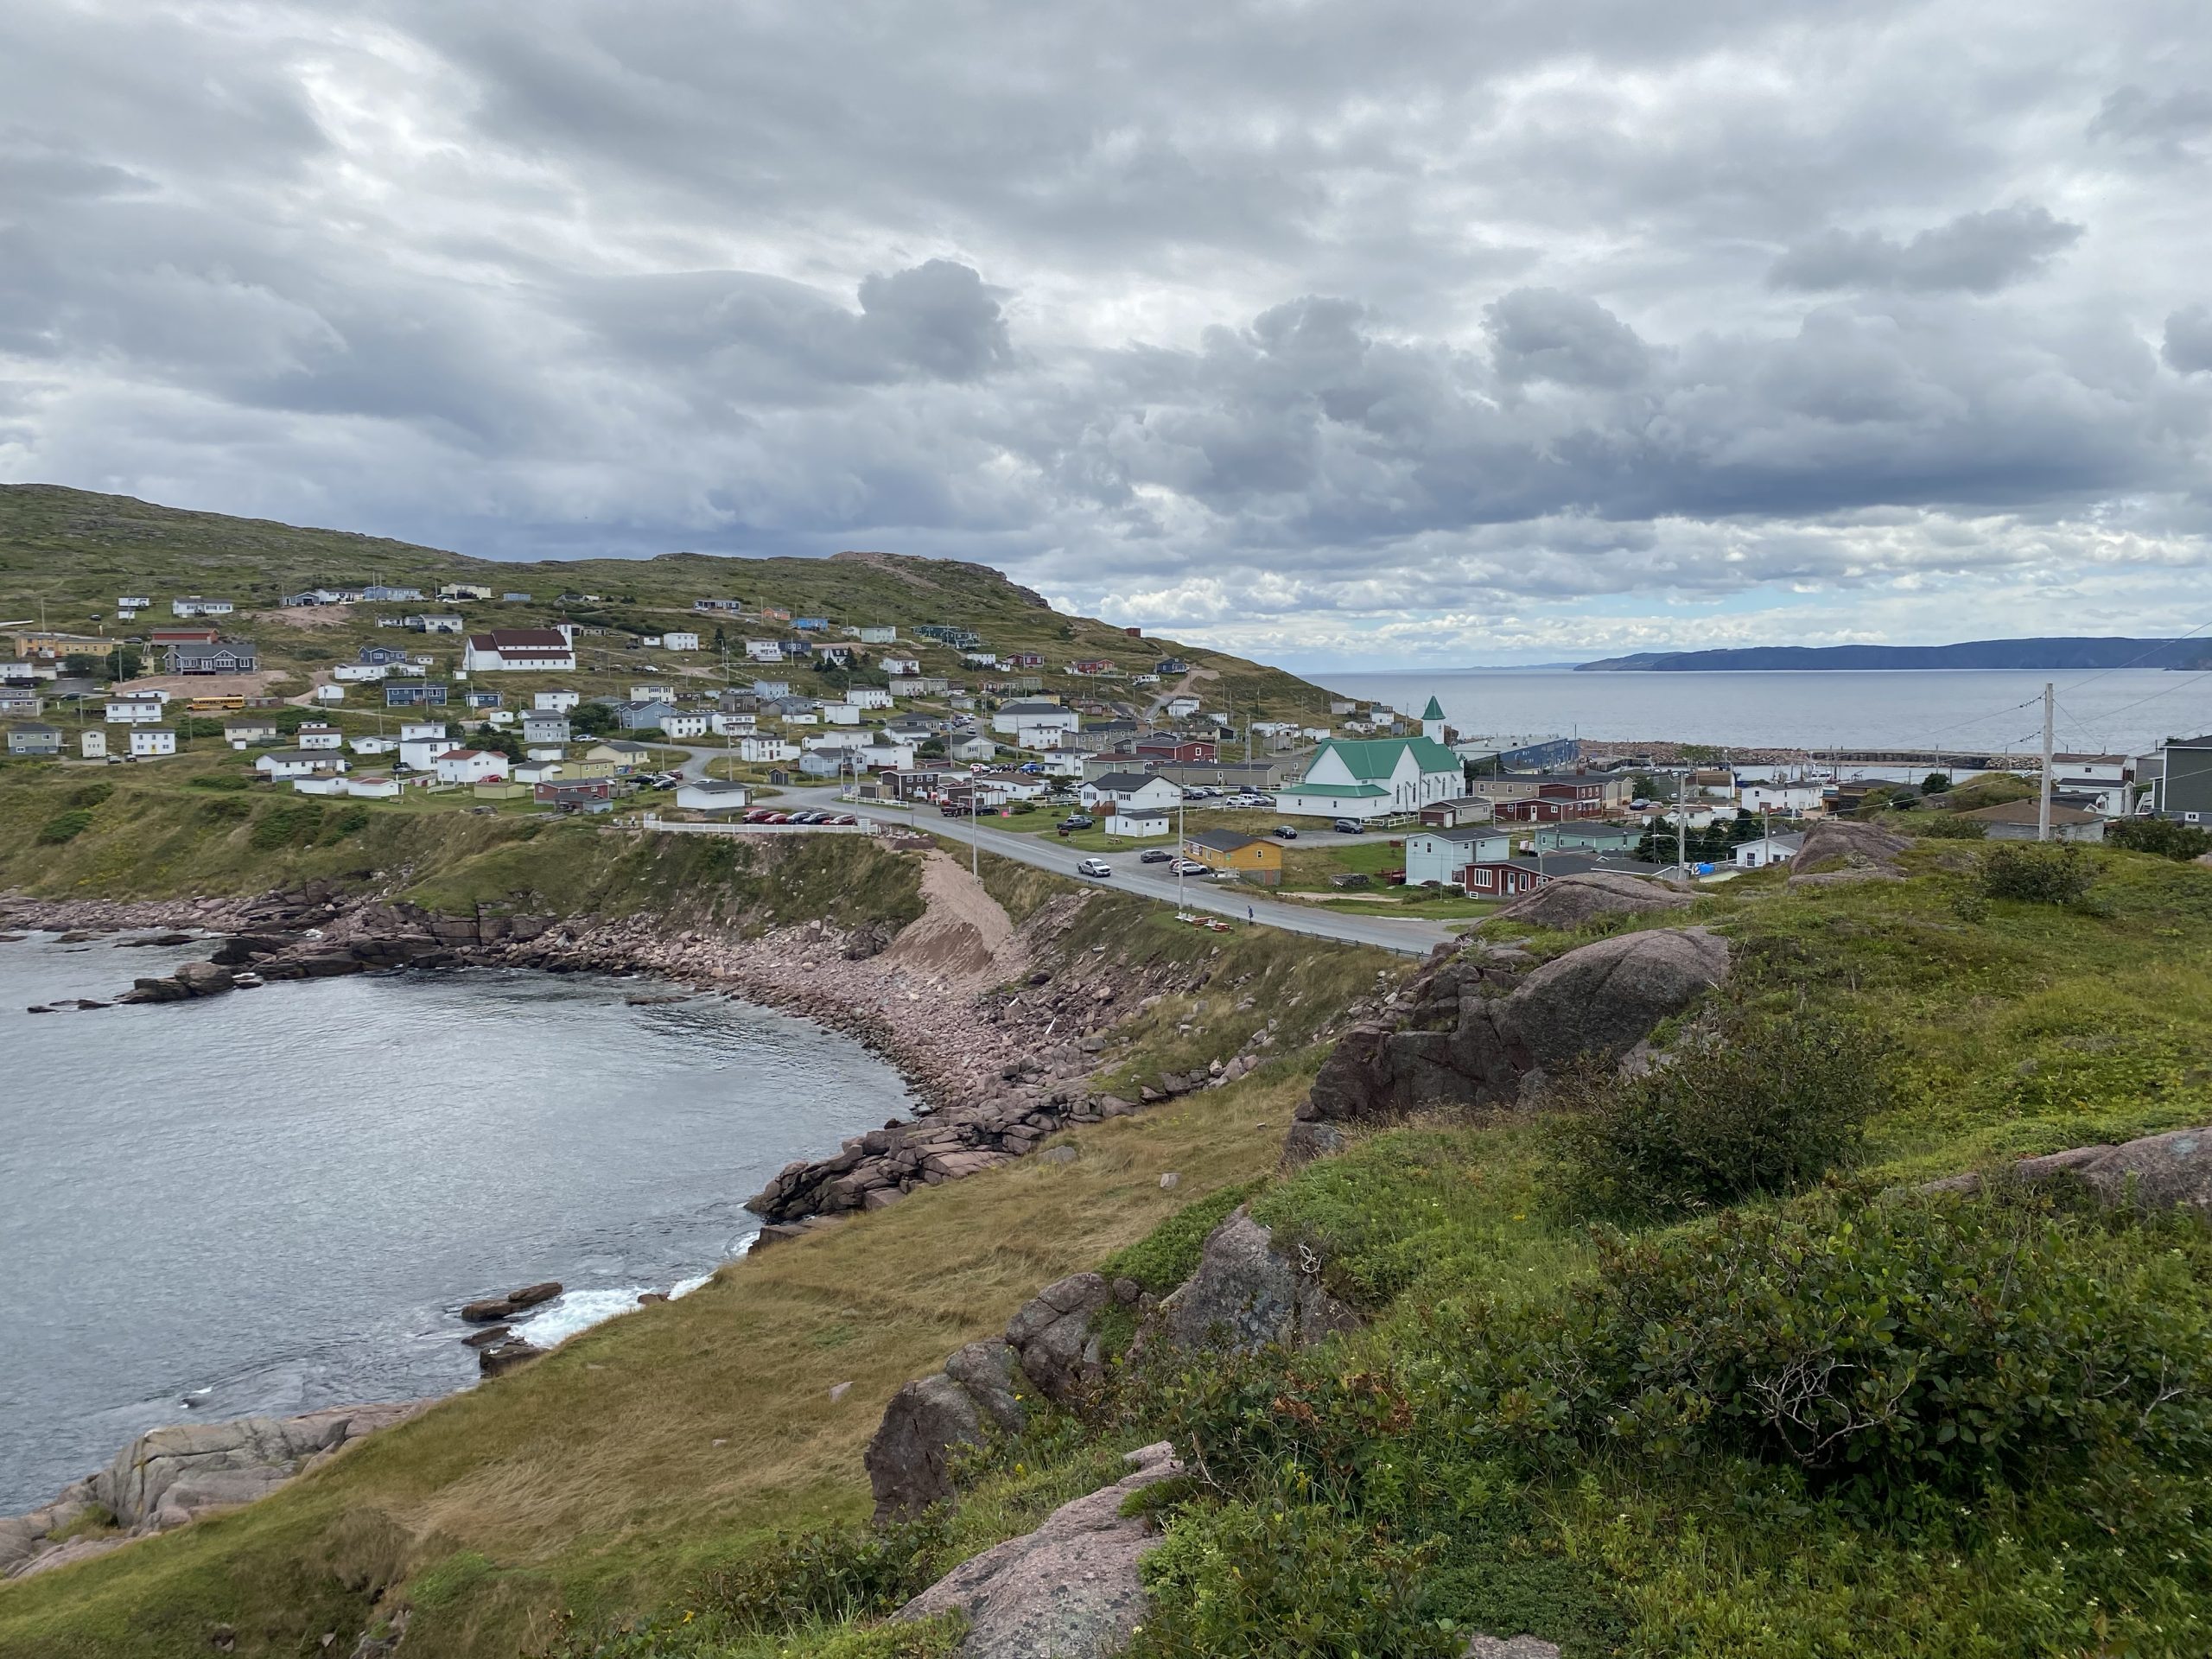 A view of Bay de Verde in Newfoundland.